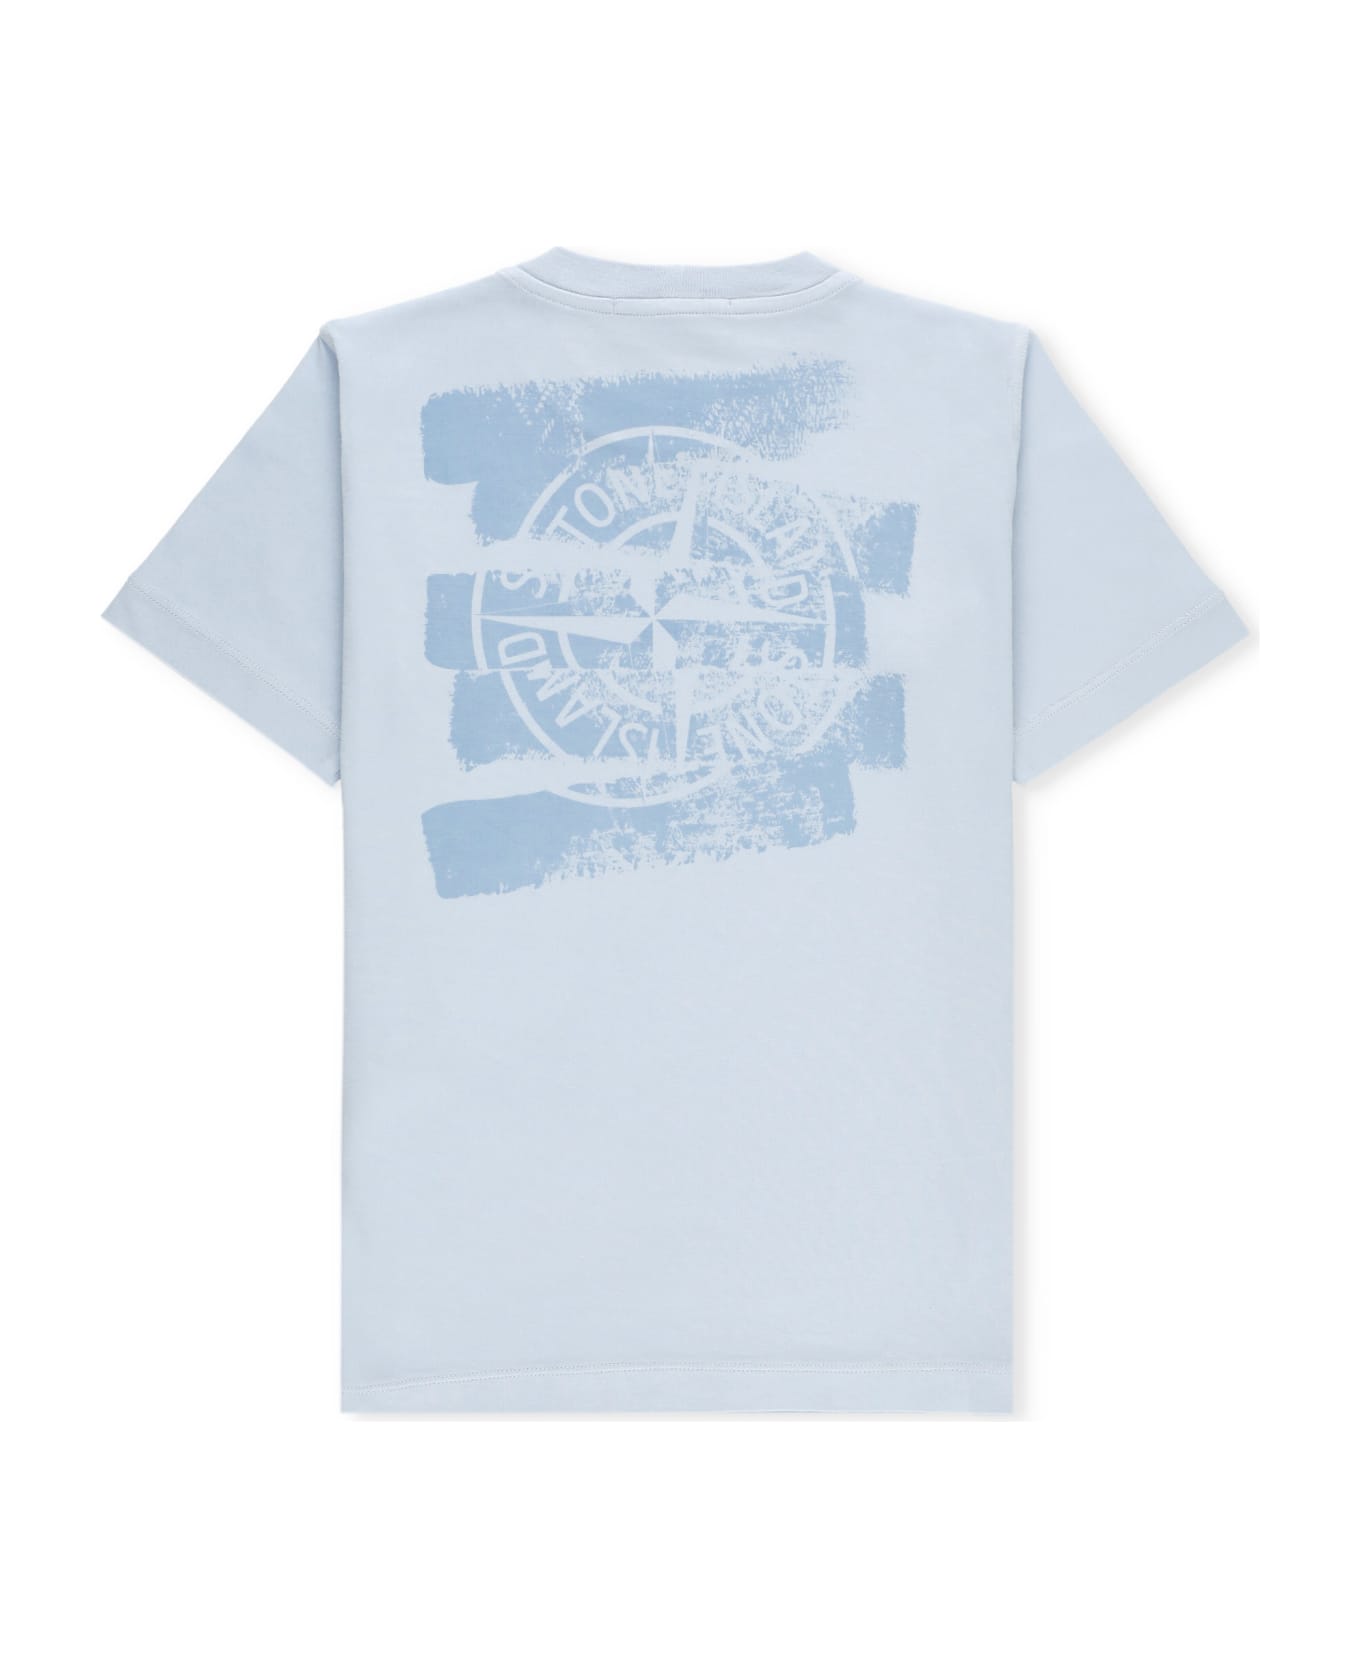 Stone Island Cotton T-shirt - Light Blue